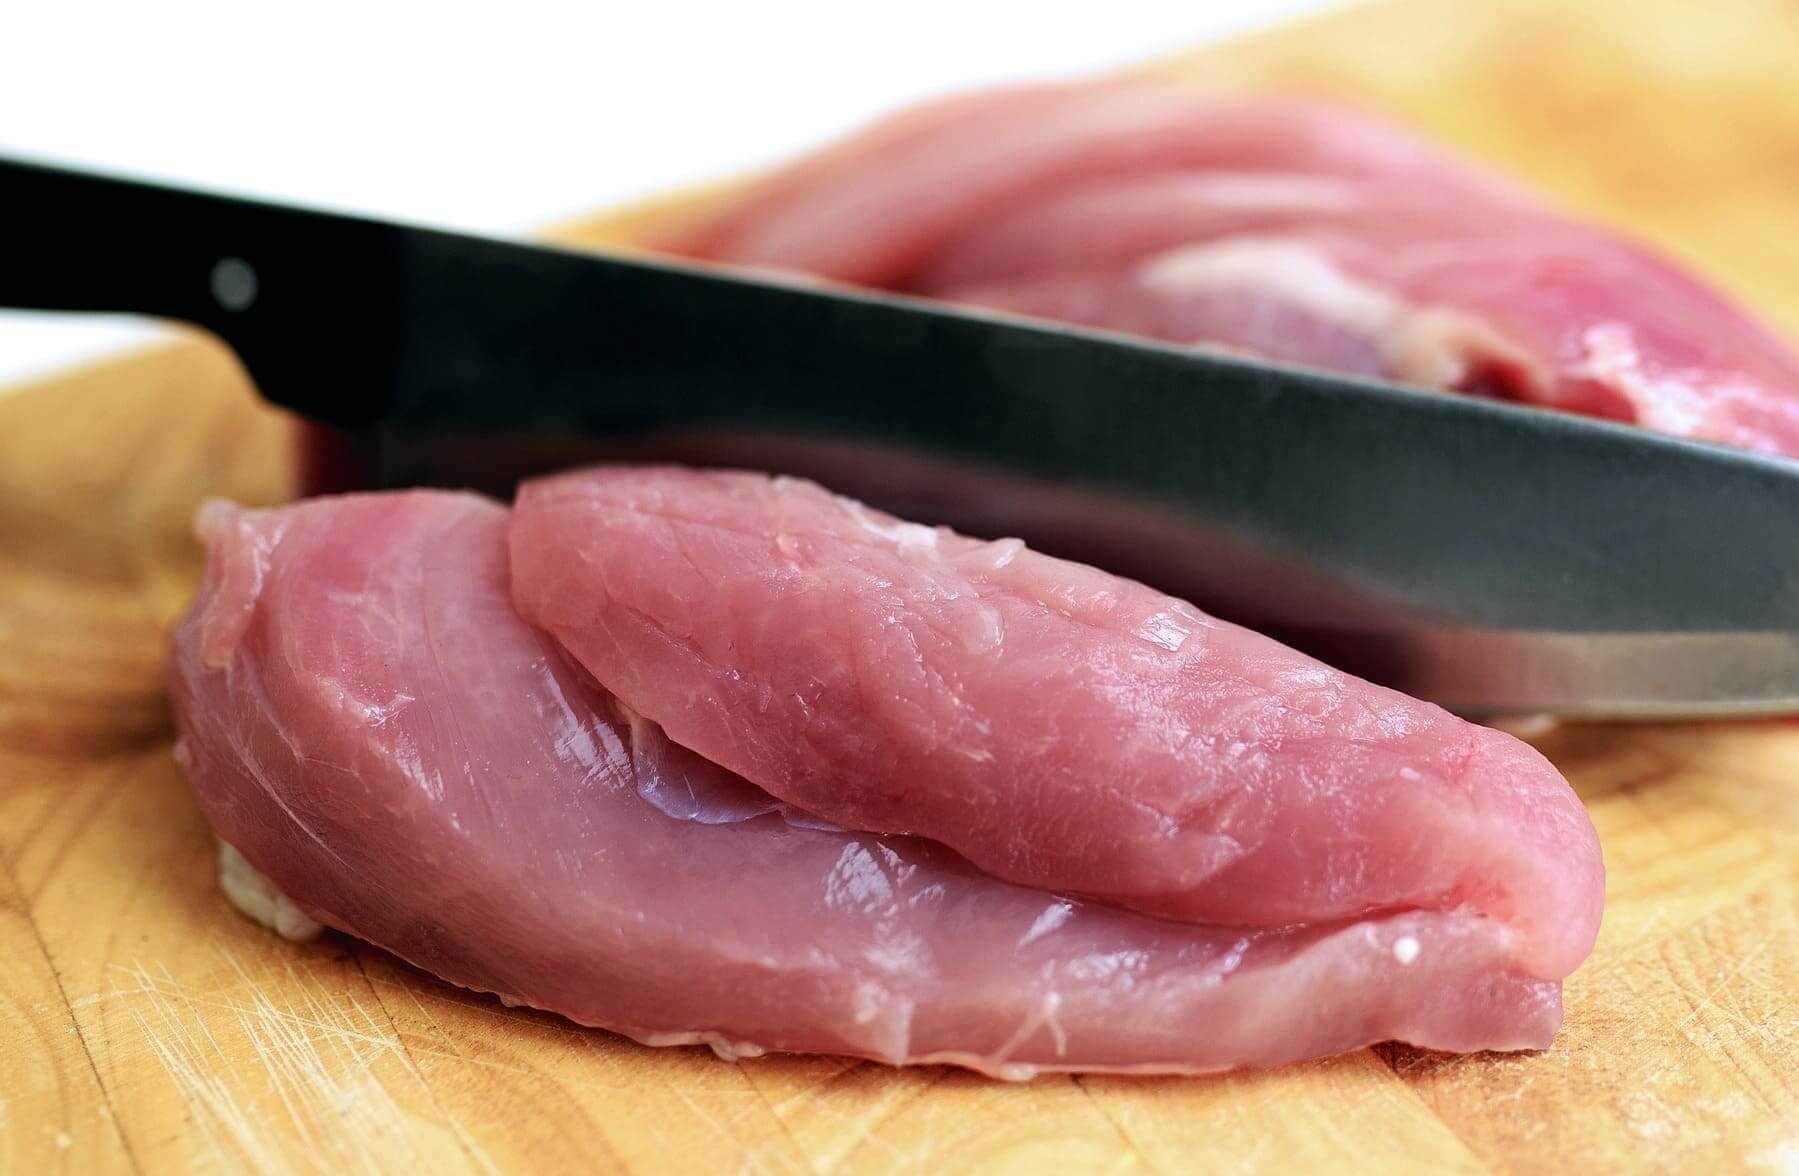 Raw chicken meat being sliced